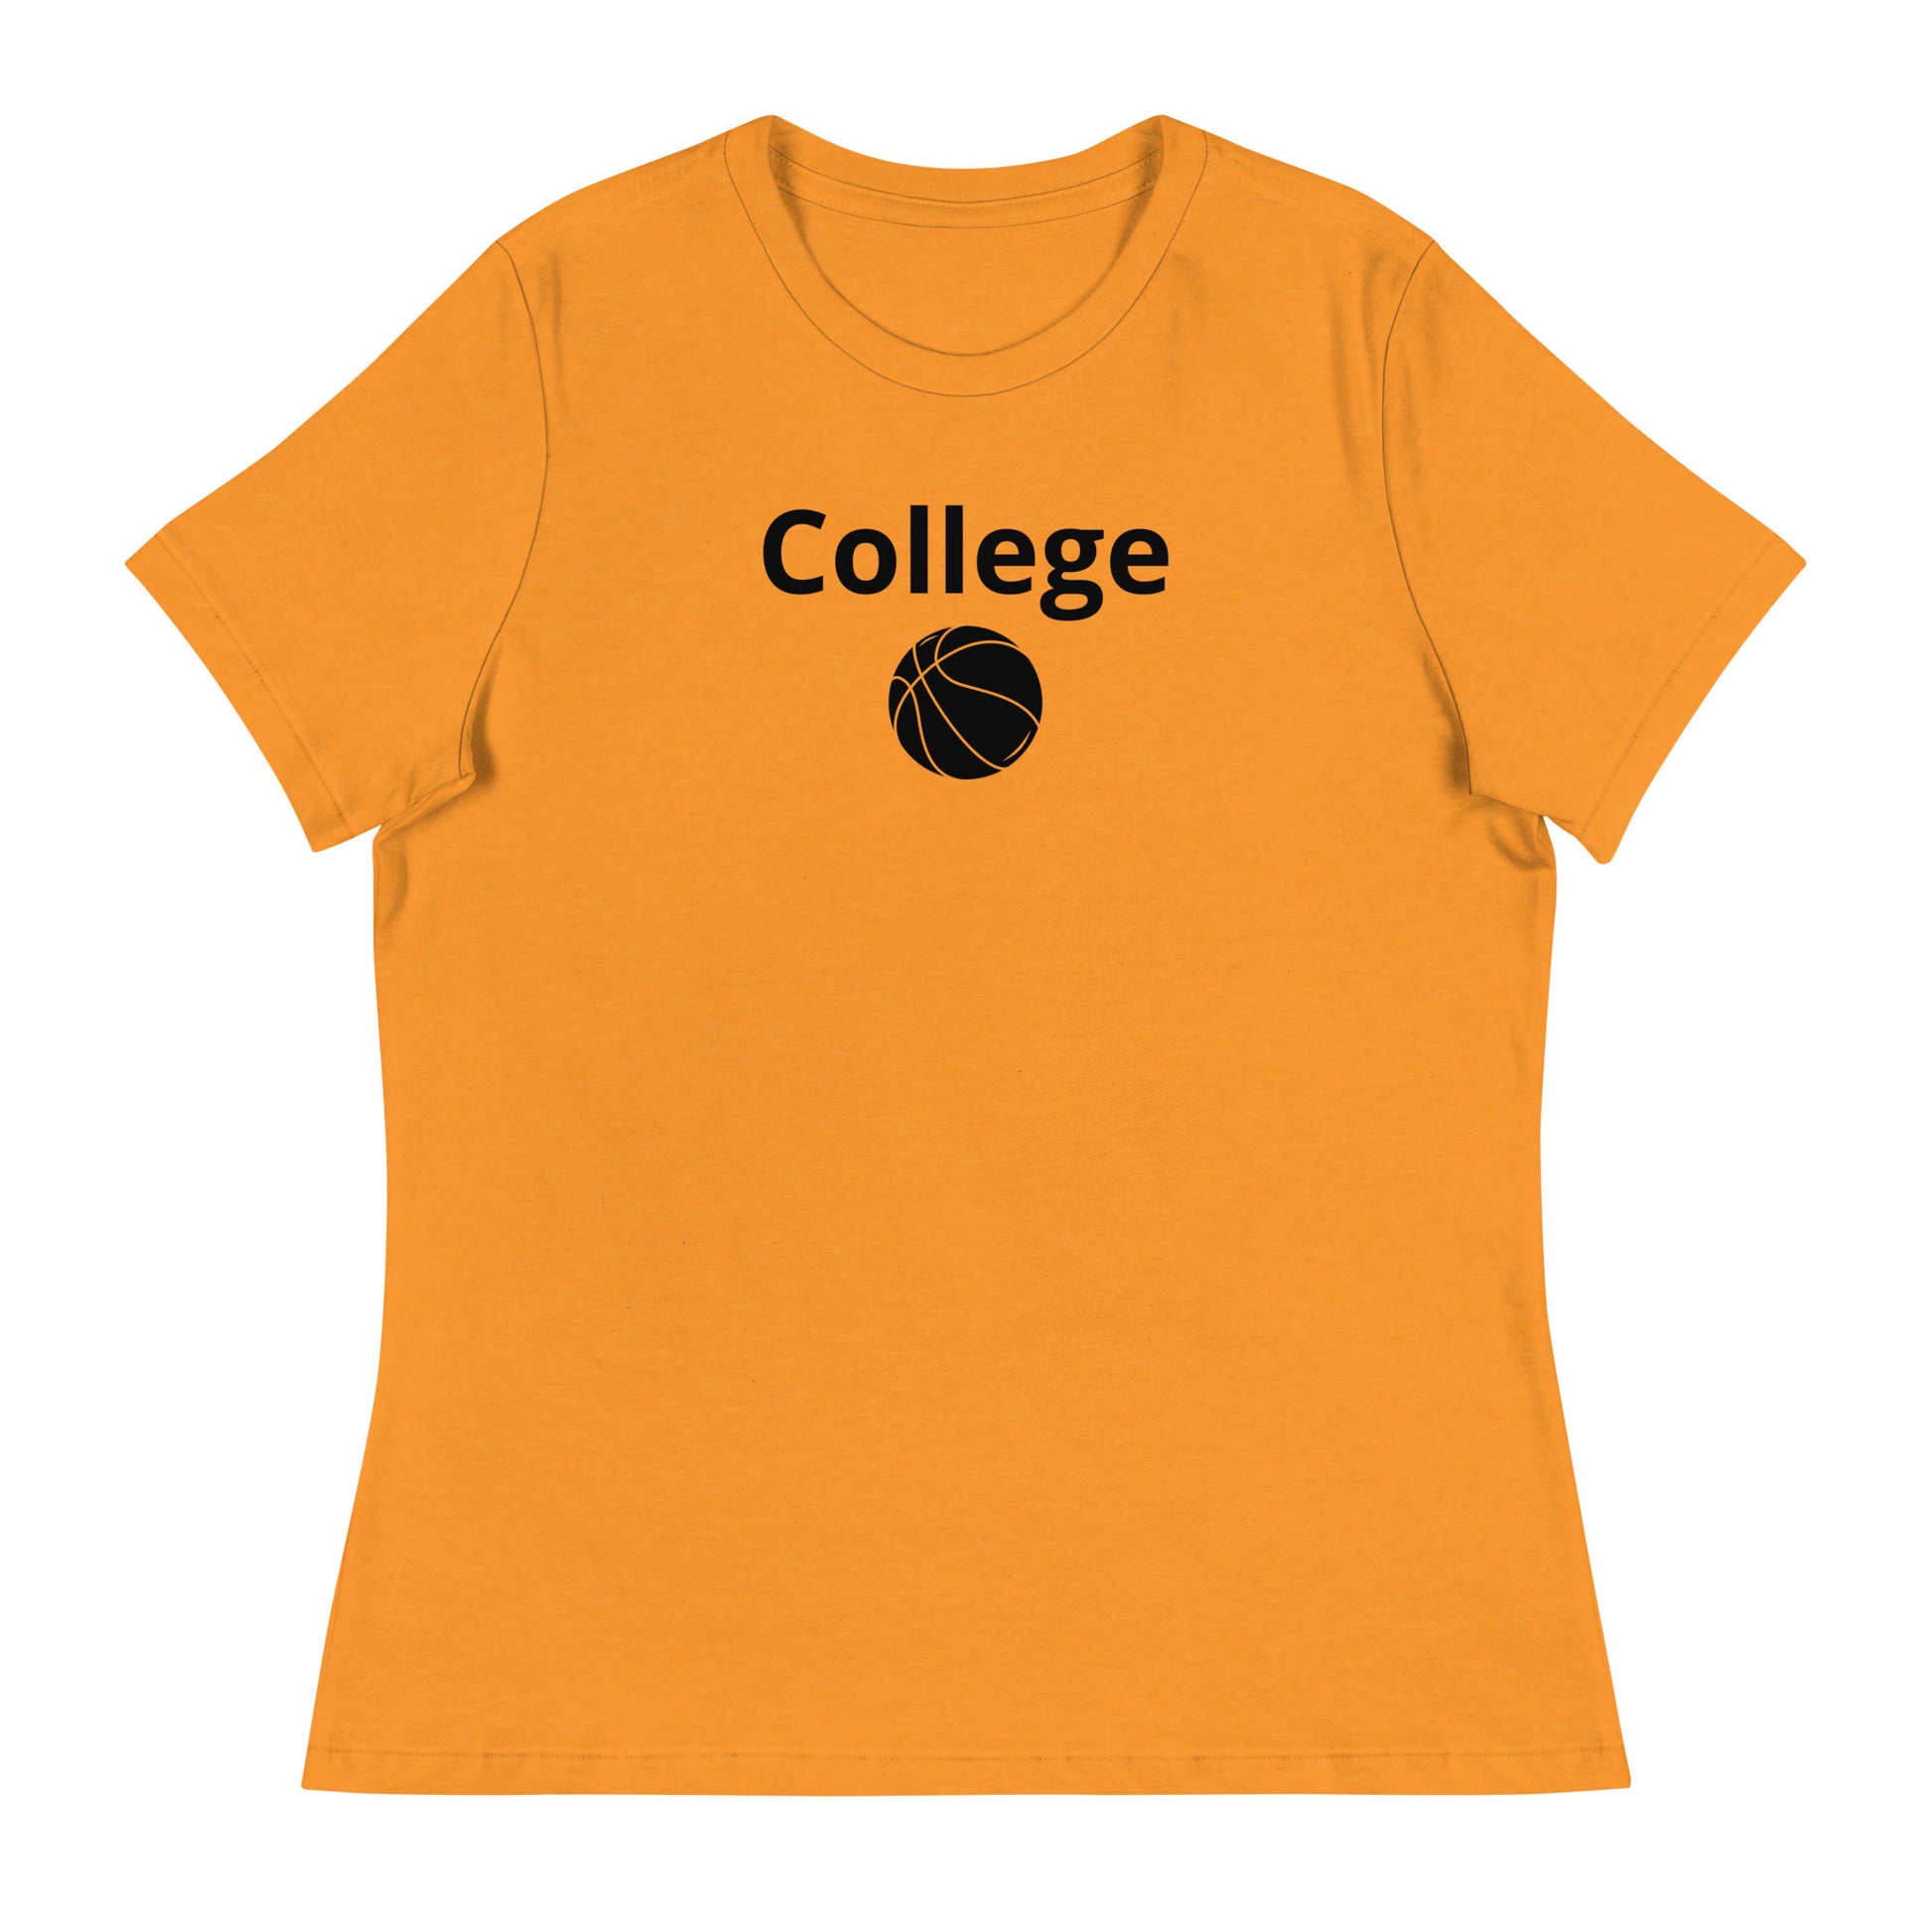 Women's college basketball graphic tee shirt in heather marmalade-orange